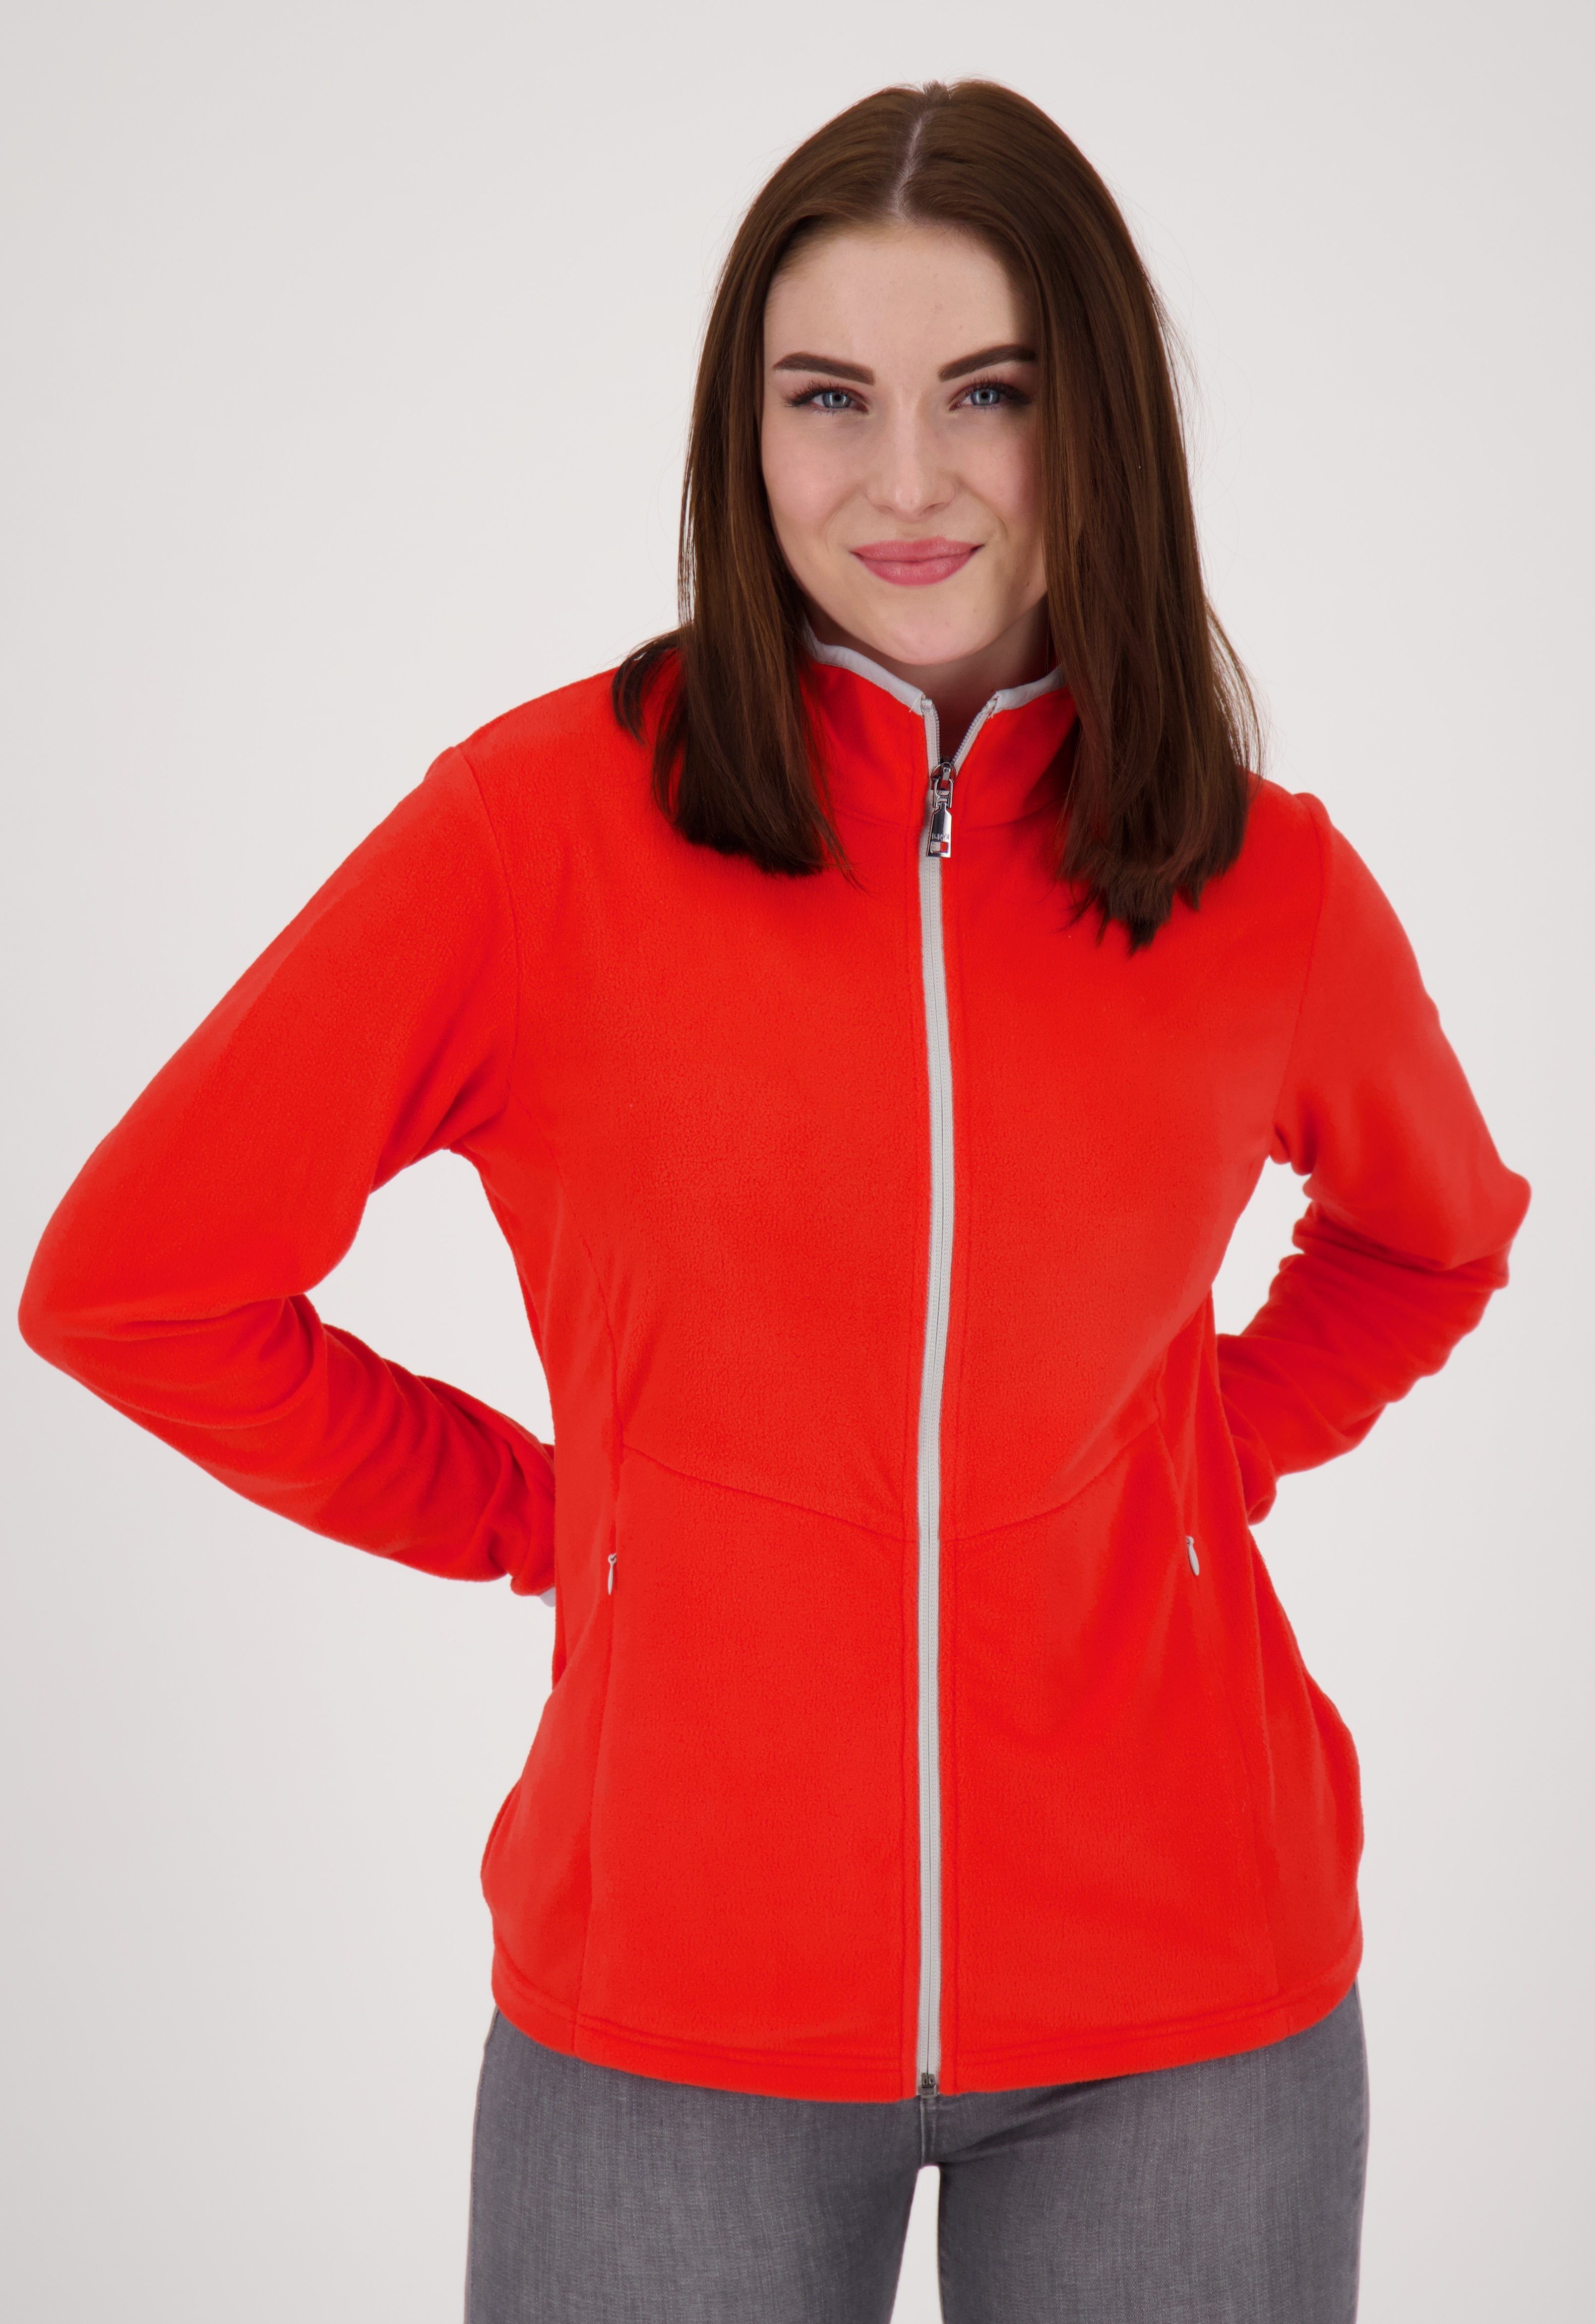 Damen Fleece Windbreaker online kaufen | OTTO